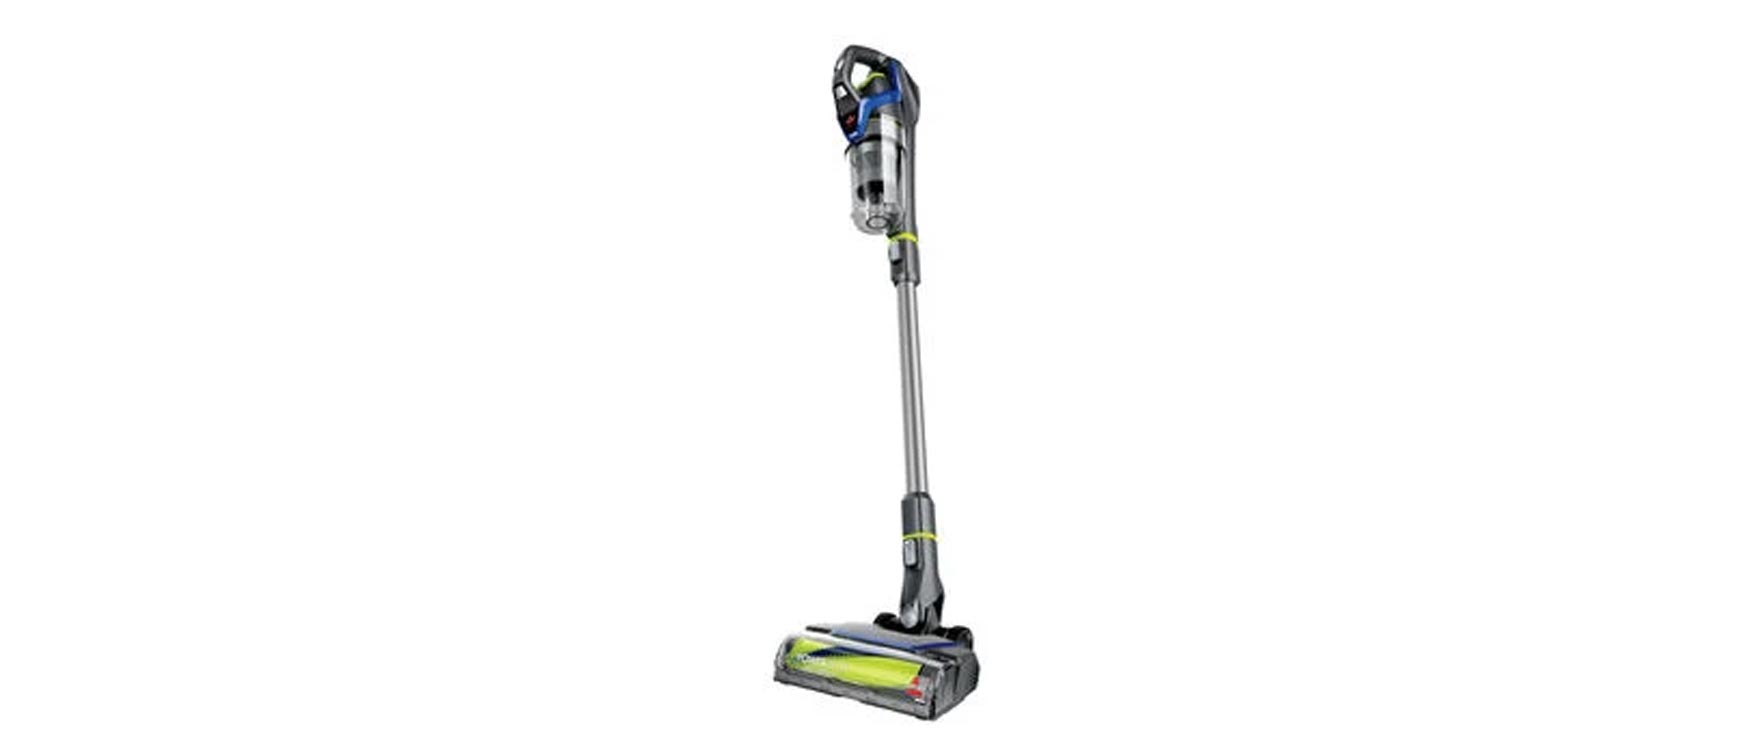 8. BISSELL PowerGlide Pet Slim Cordless Stick Vacuum